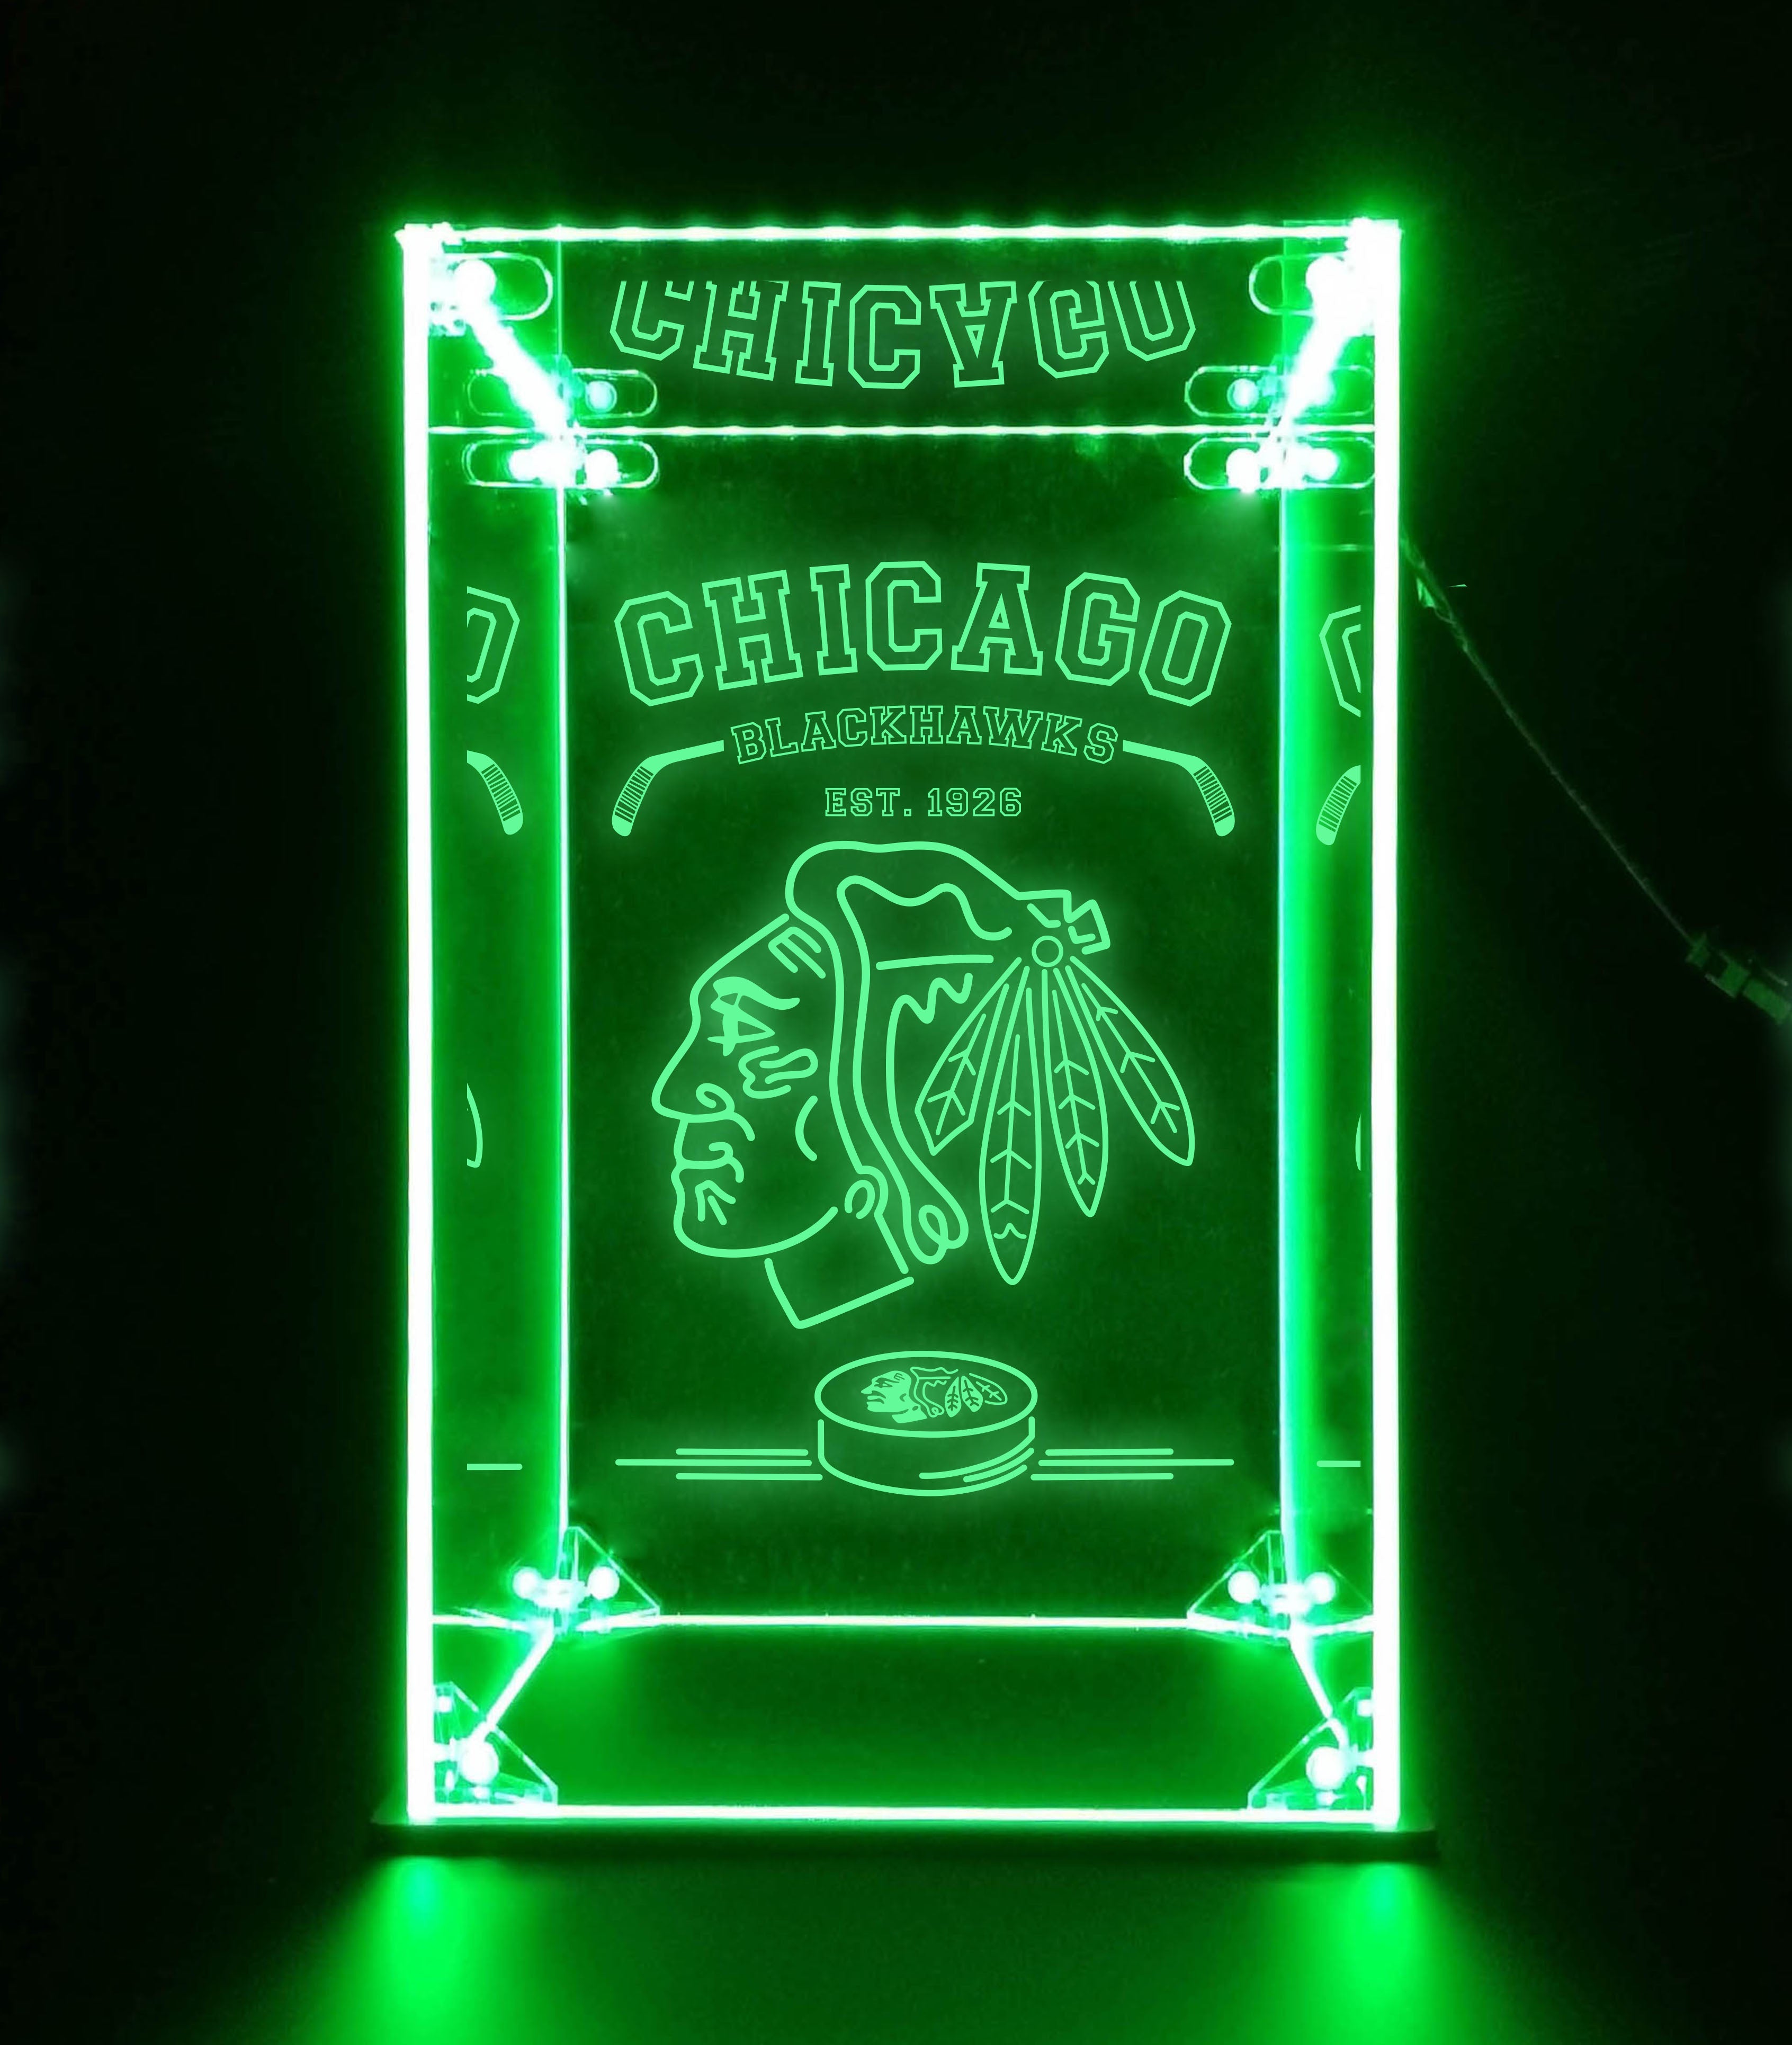 LED Display Case For Chicago Blackhawks Sports Memorabilia